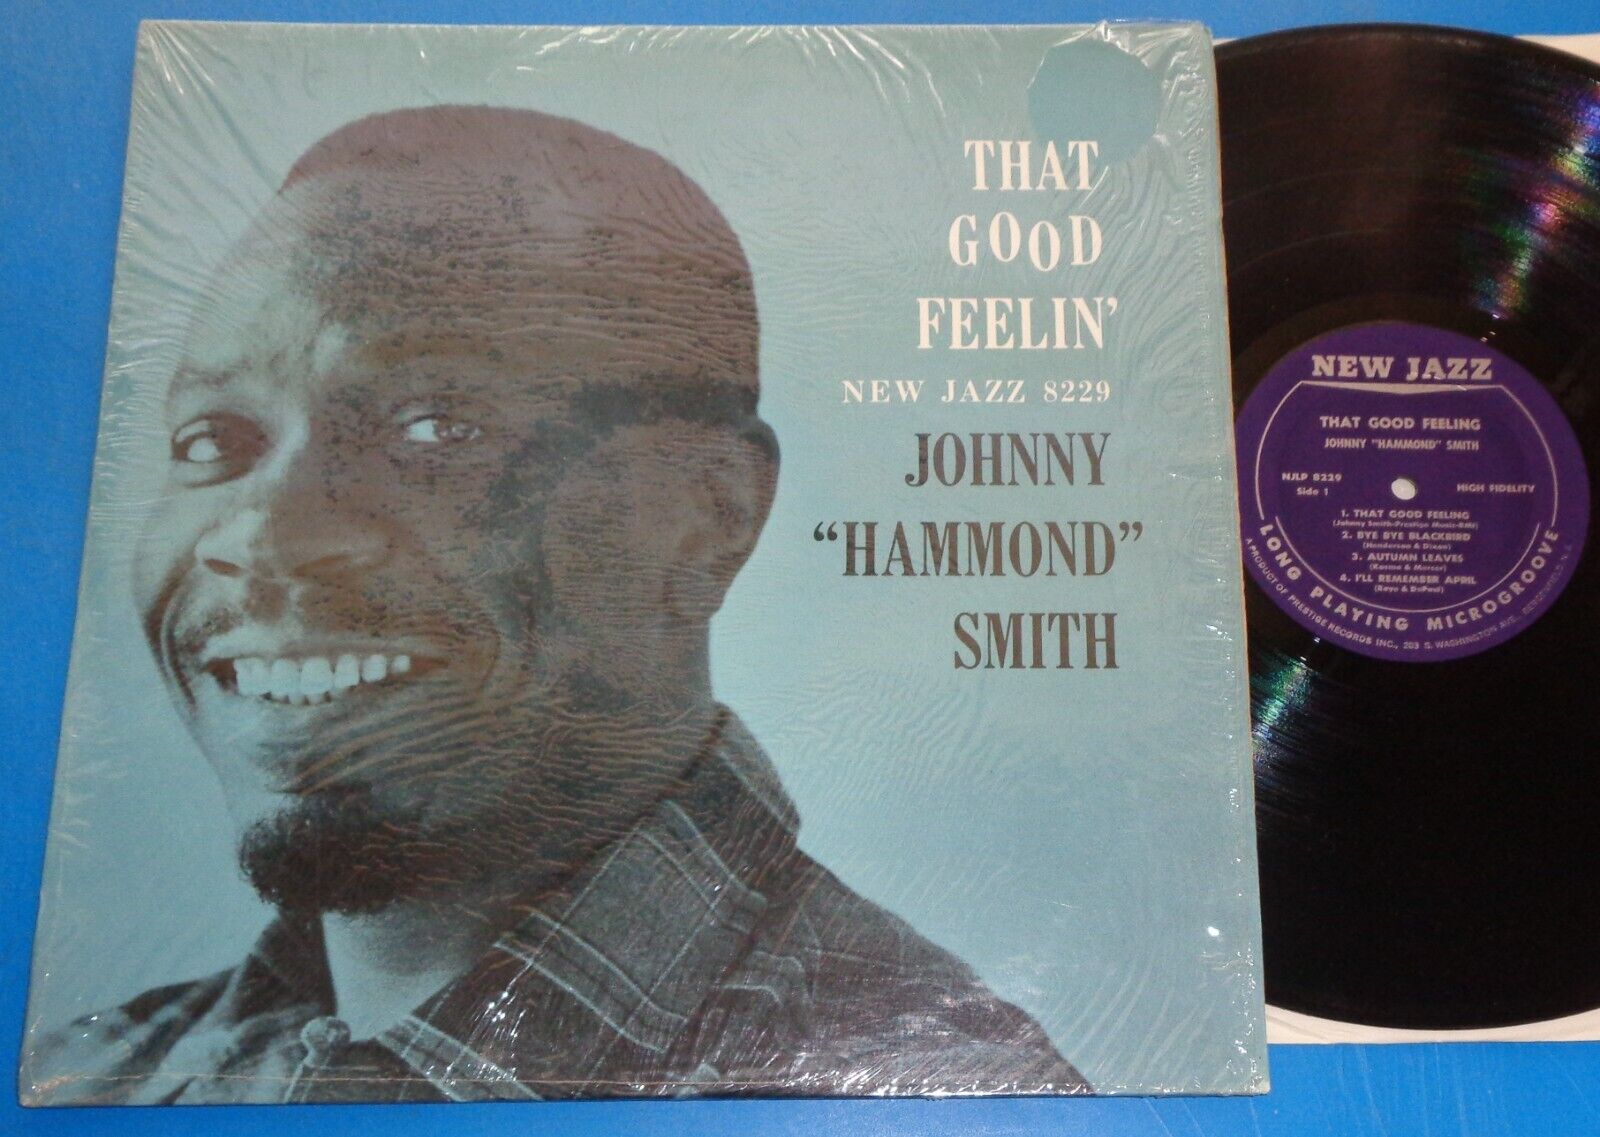 JOHNNY "HAMMOND" SMITH - That Good Feelin' - New Jazz 8229